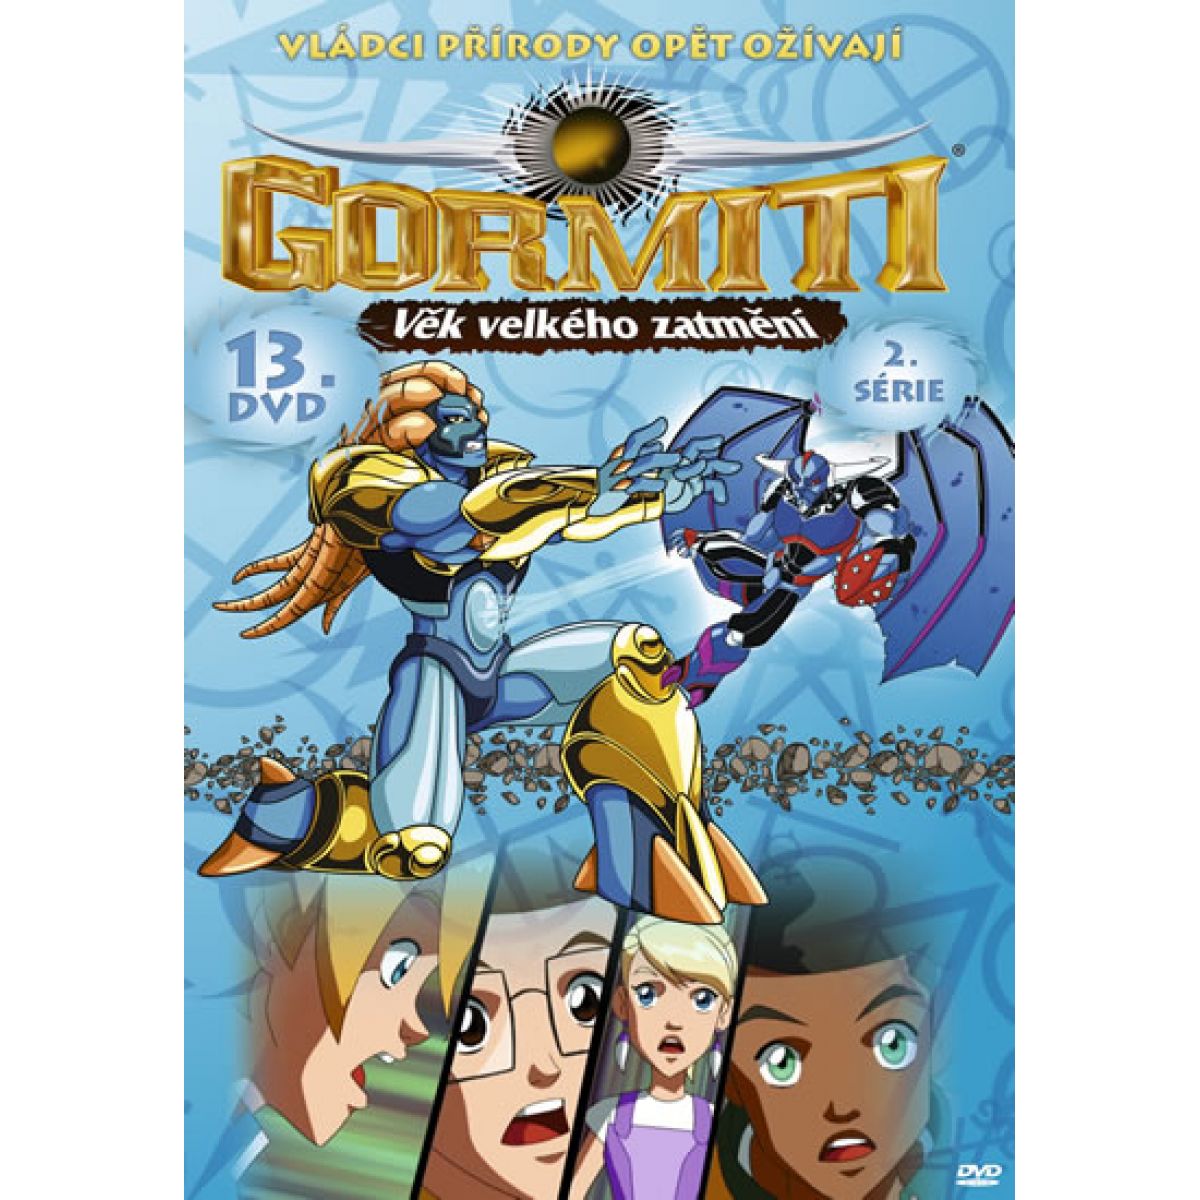 DVD Gormiti 2. série disk 13